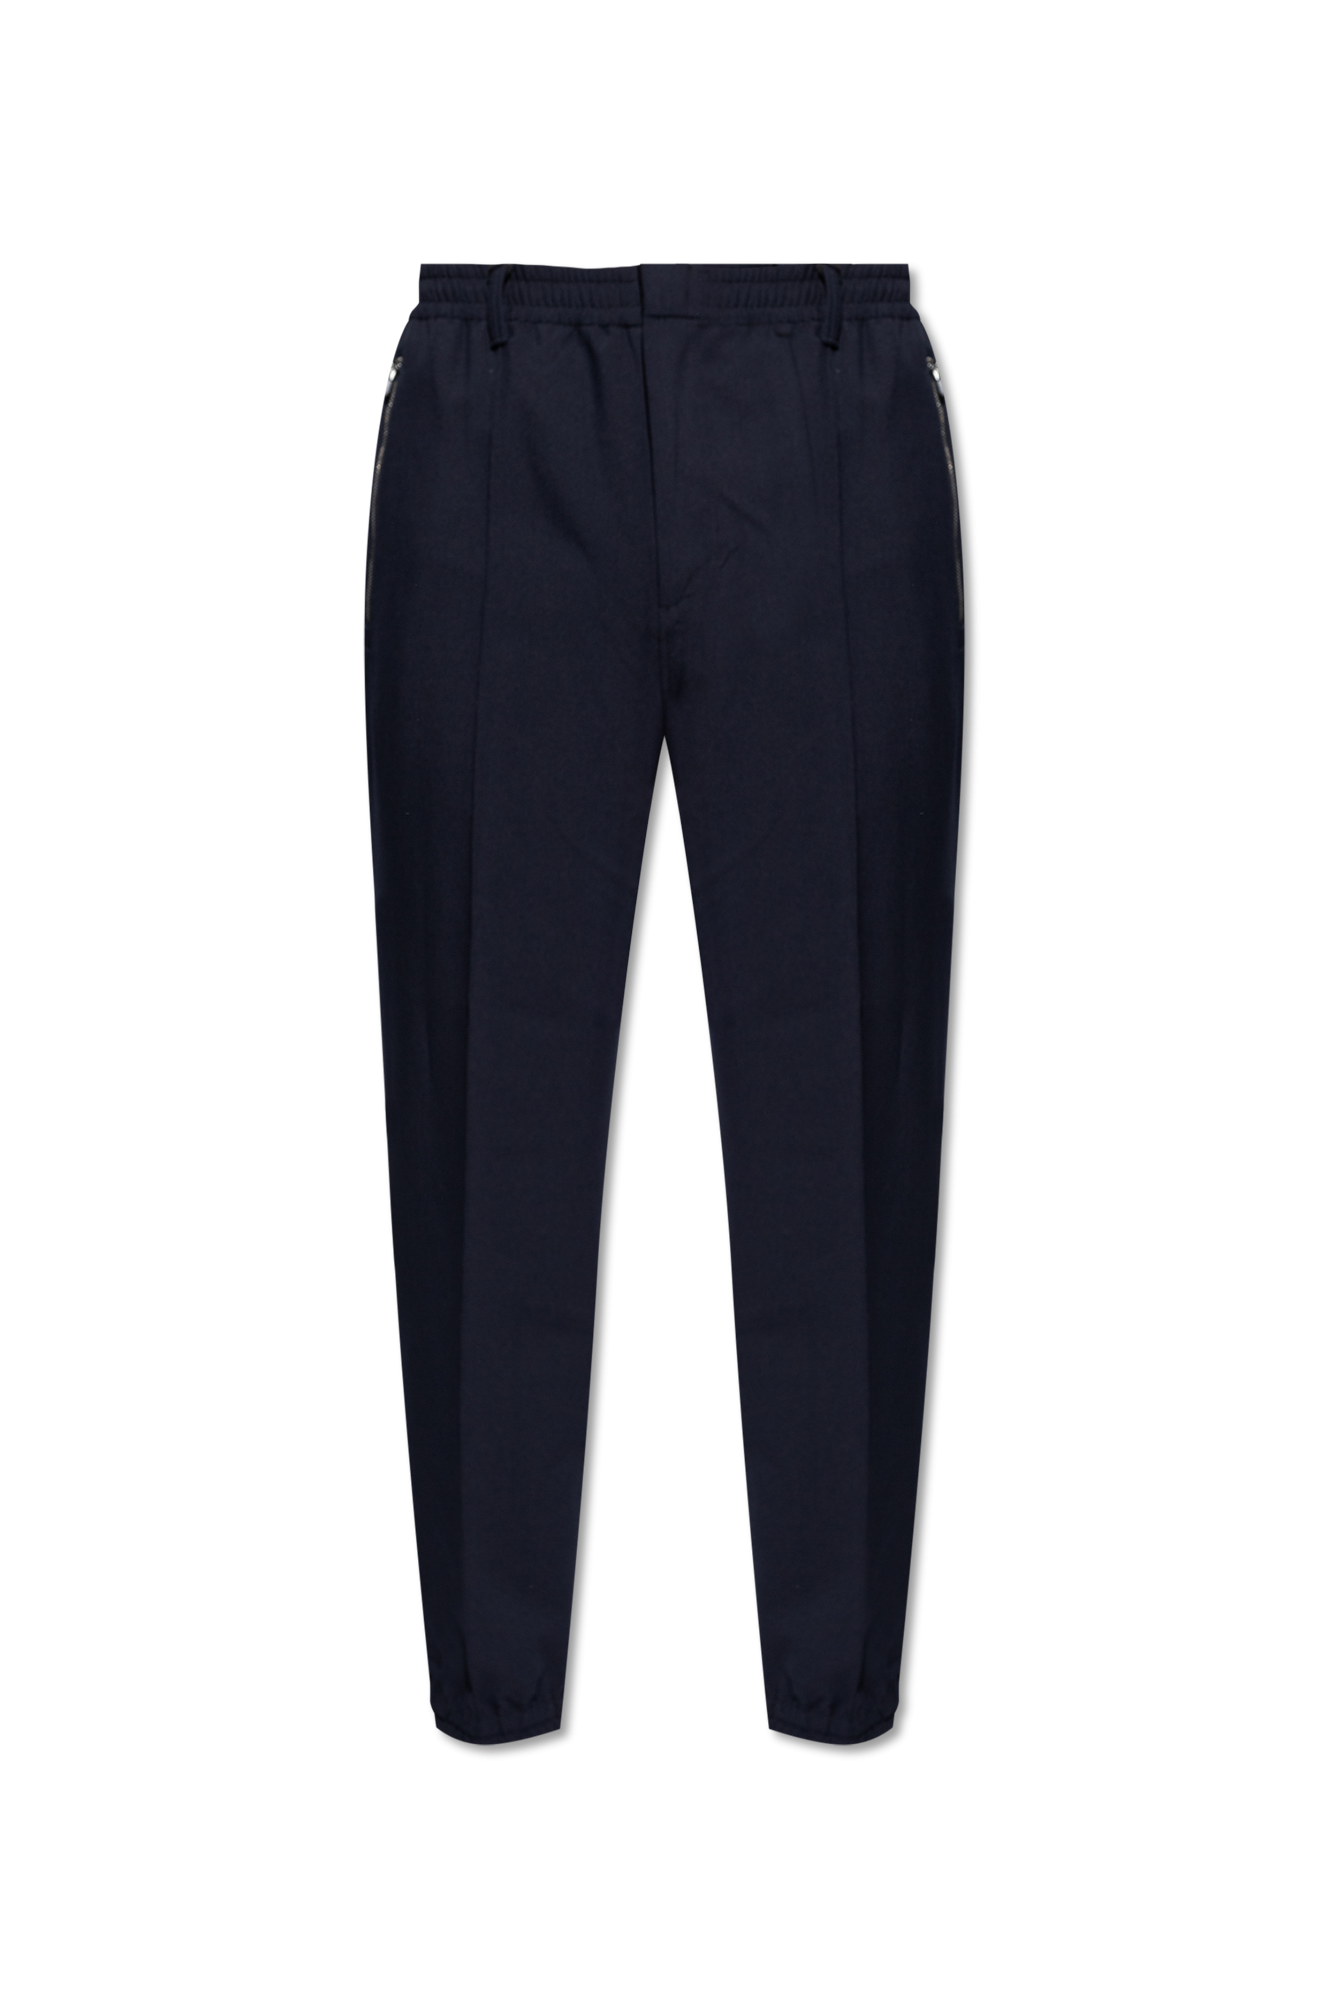 Emporio Armani Trousers with logo, Men's Clothing